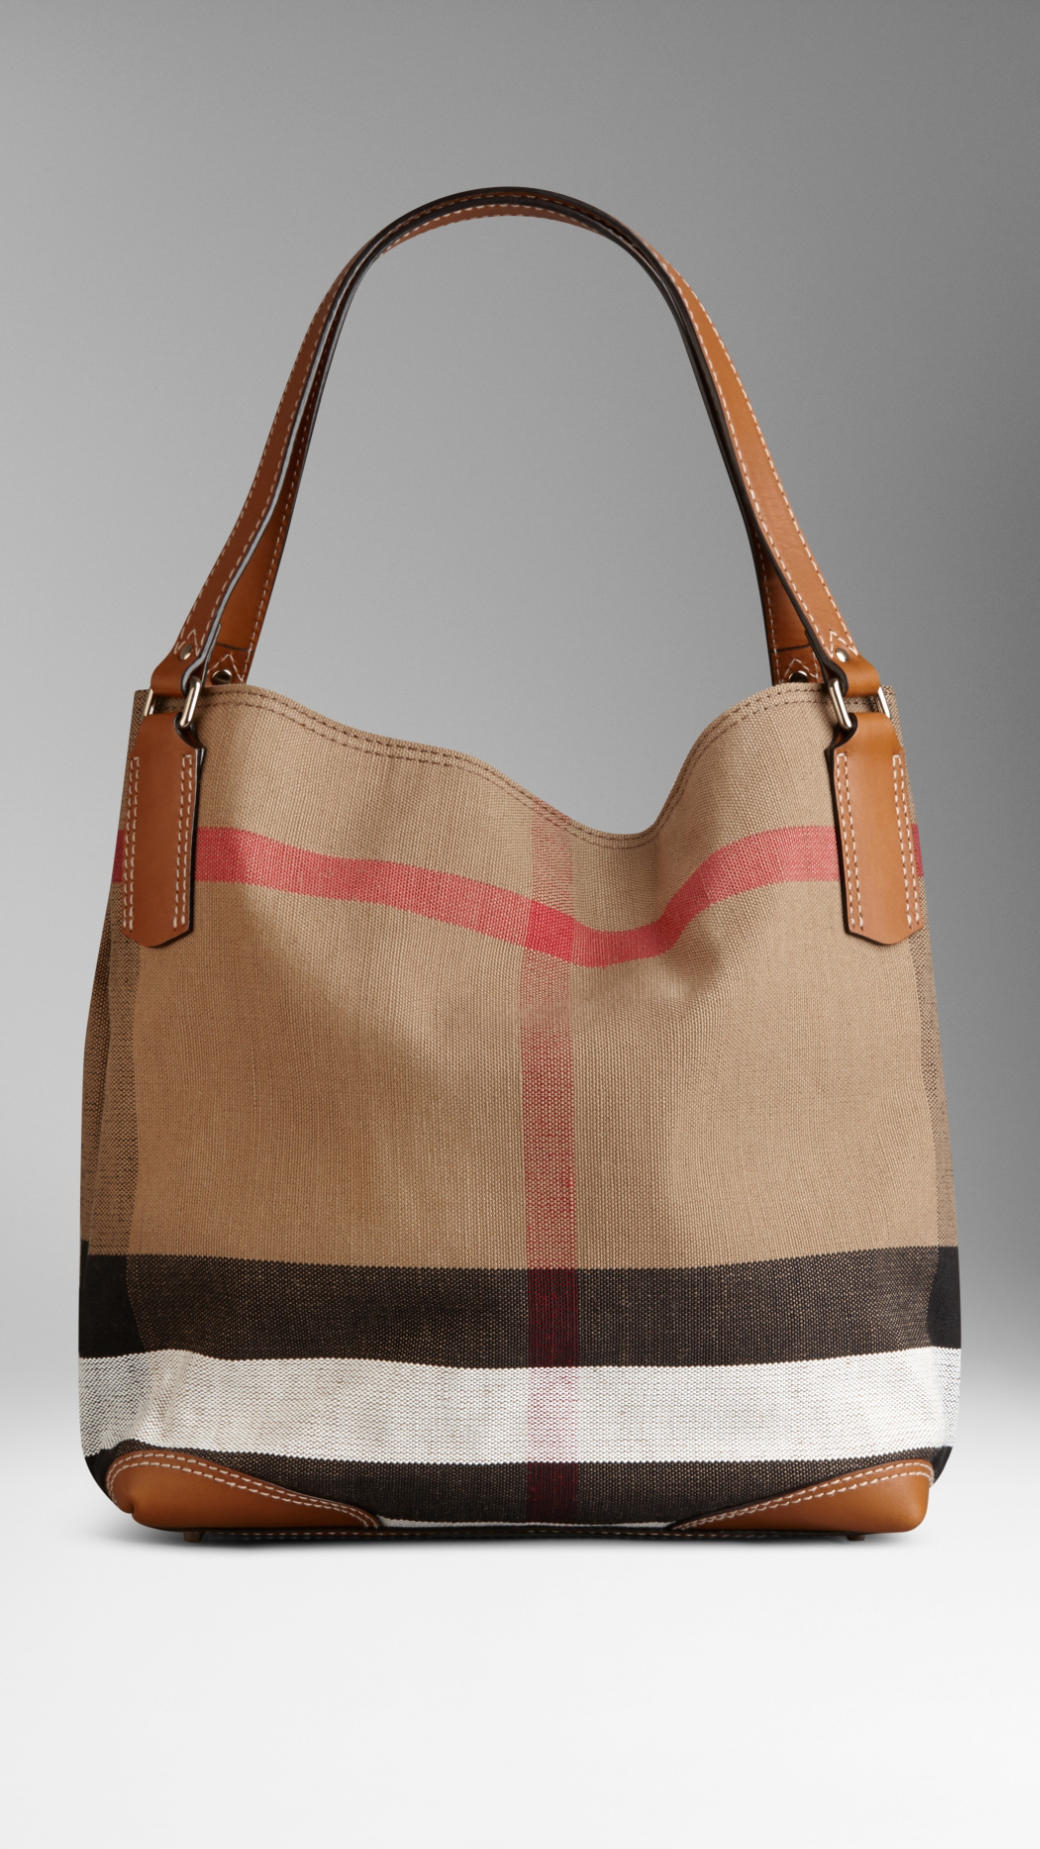 Burberry Bags & Handbags for Women | Authenticity Guaranteed | eBay